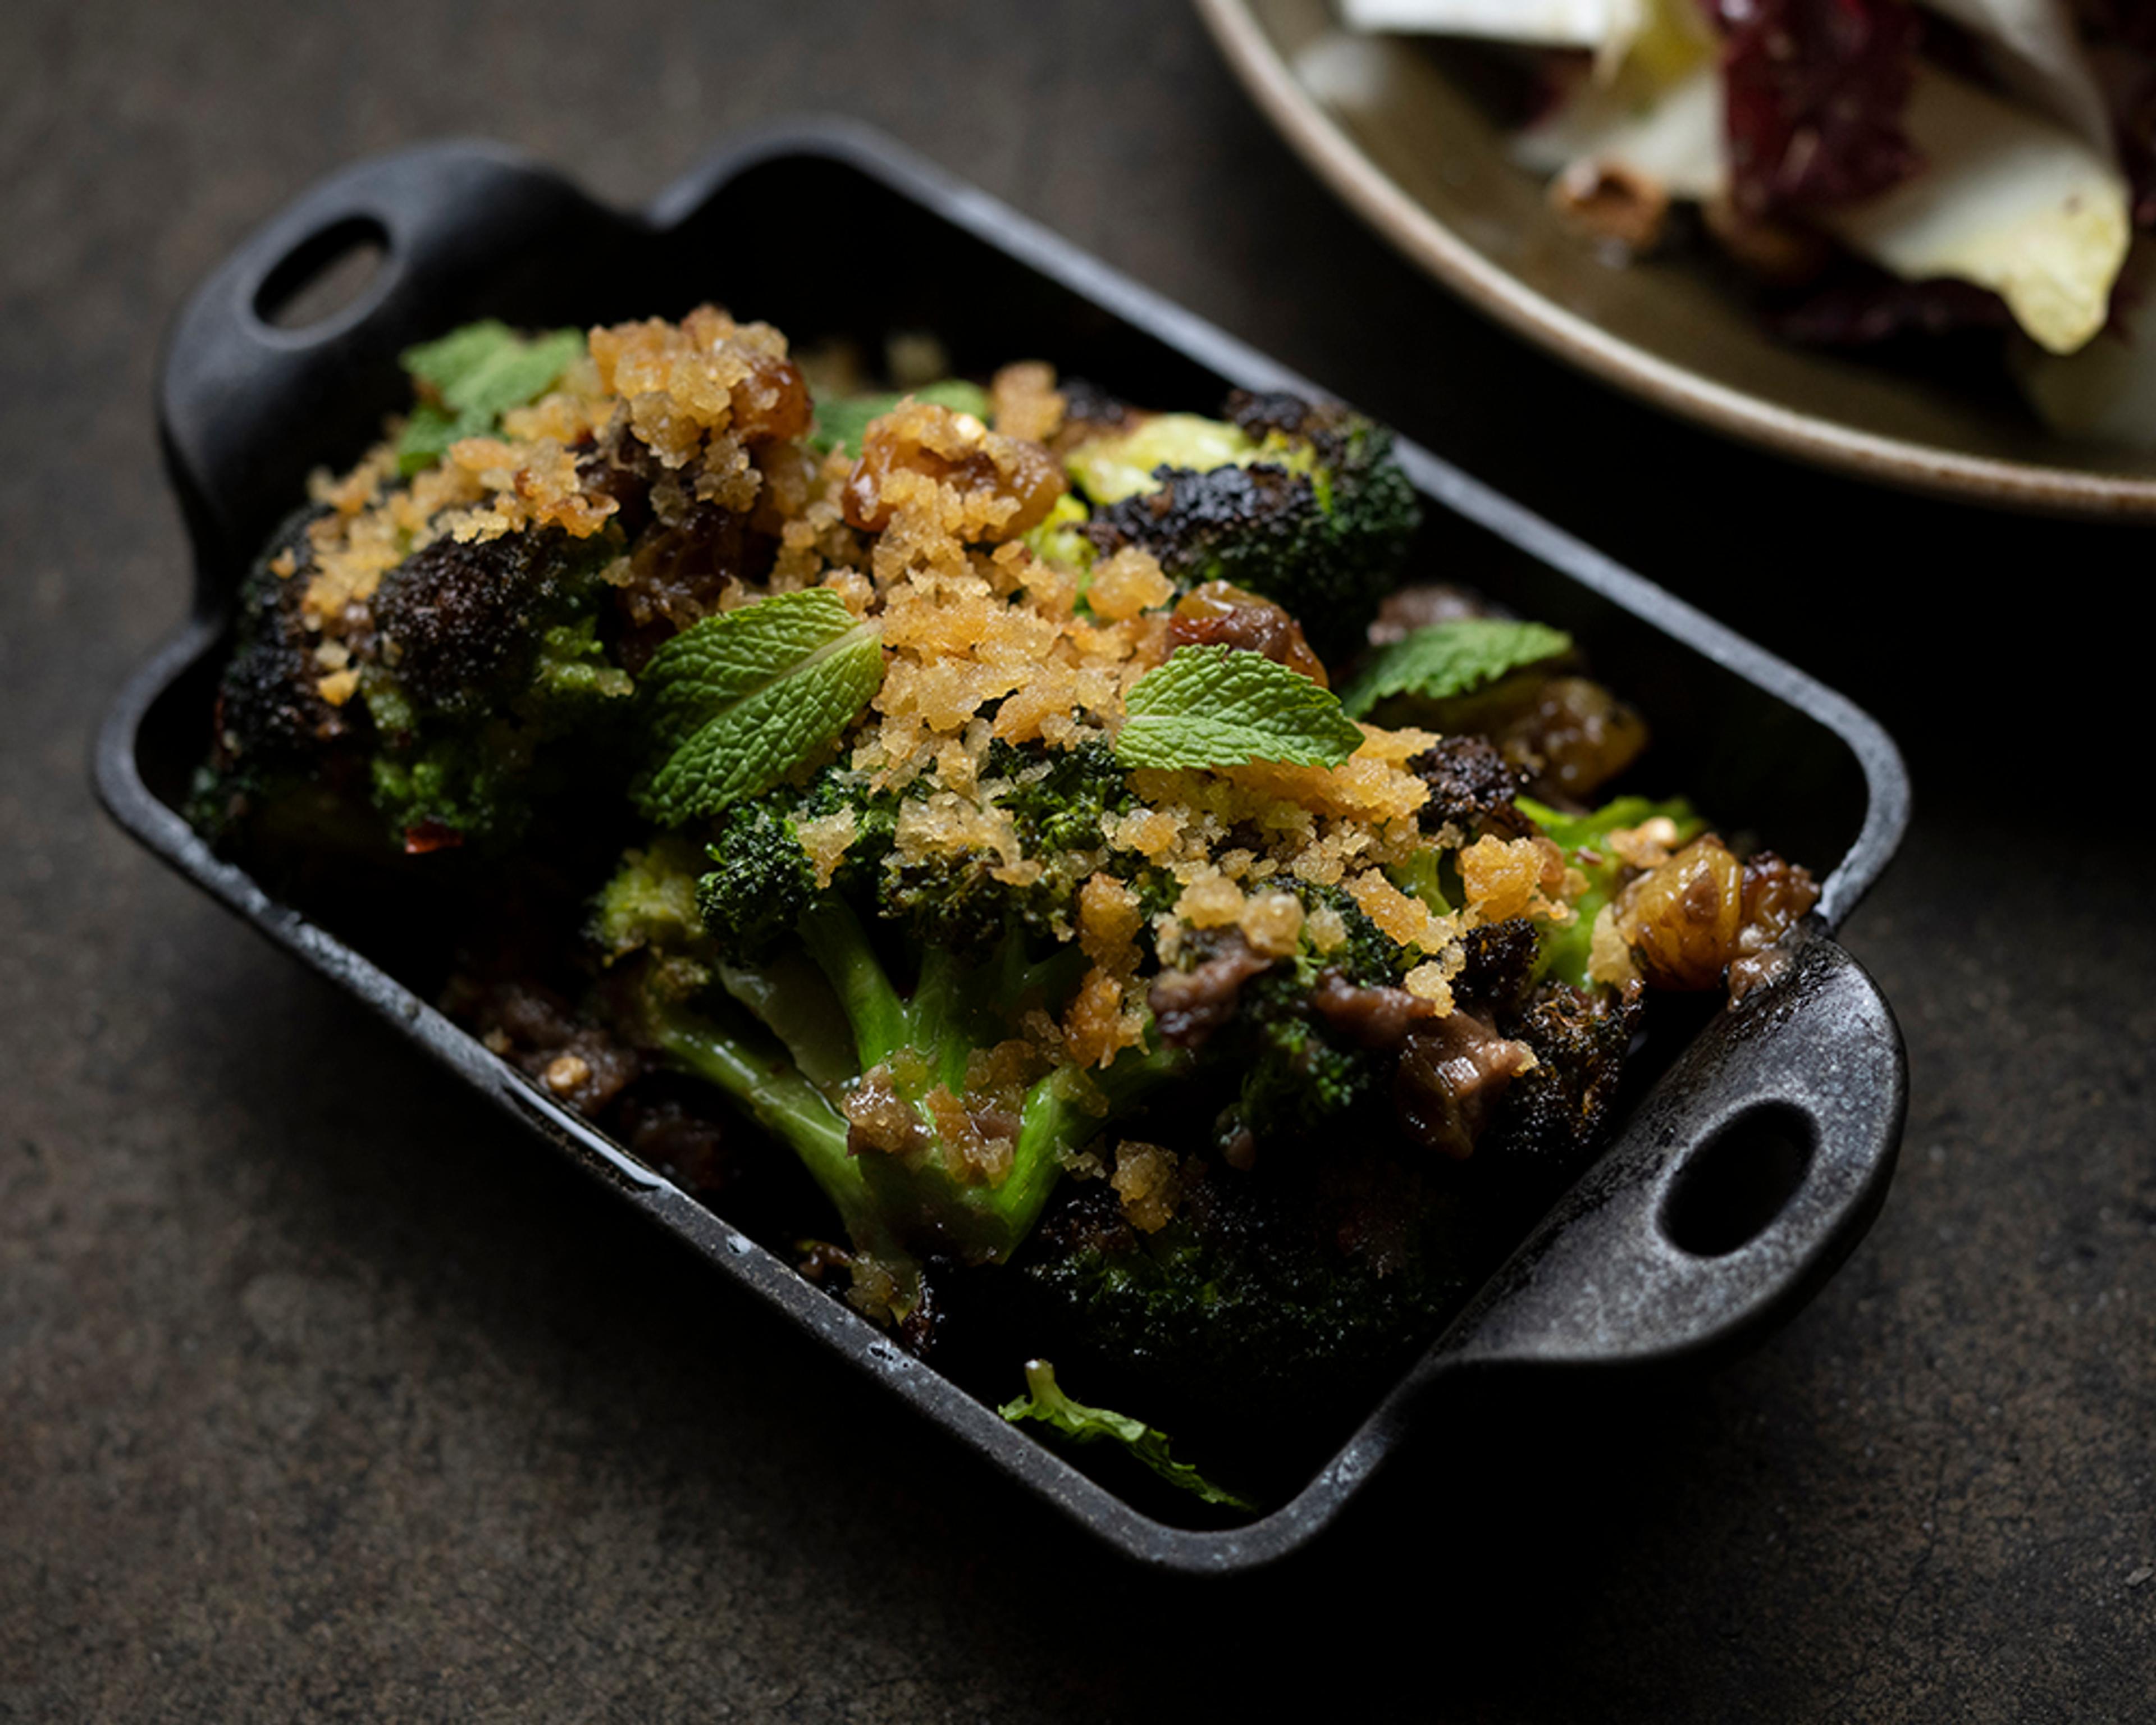 Roasted broccoli with raisins, mint, bread crumbs 